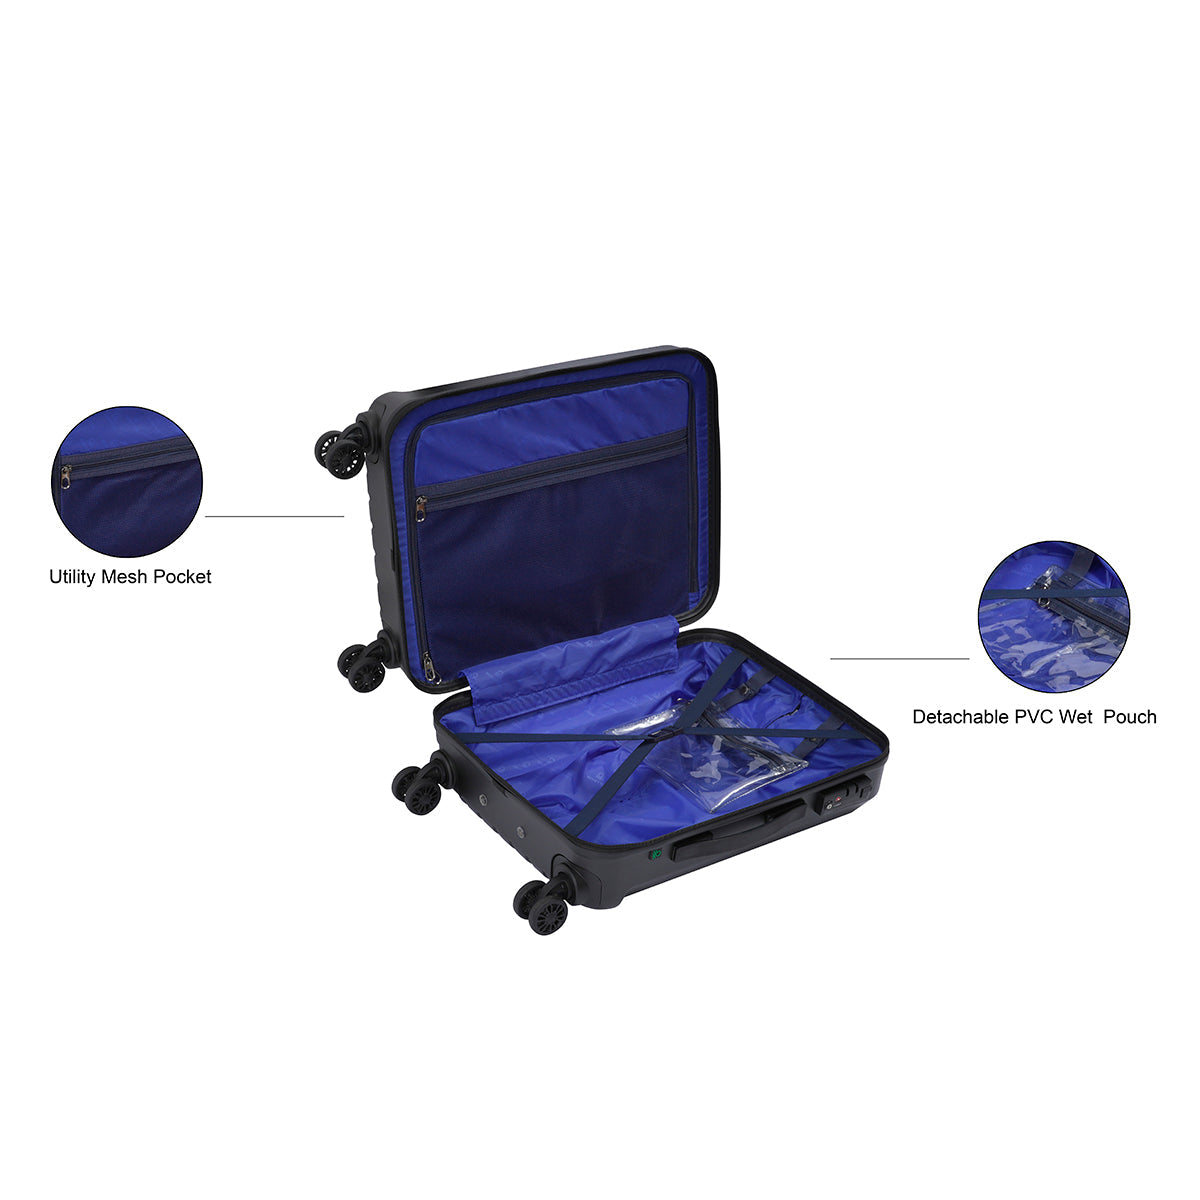 United Colors of Benetton Cobalt Hard Luggage Cabin Black